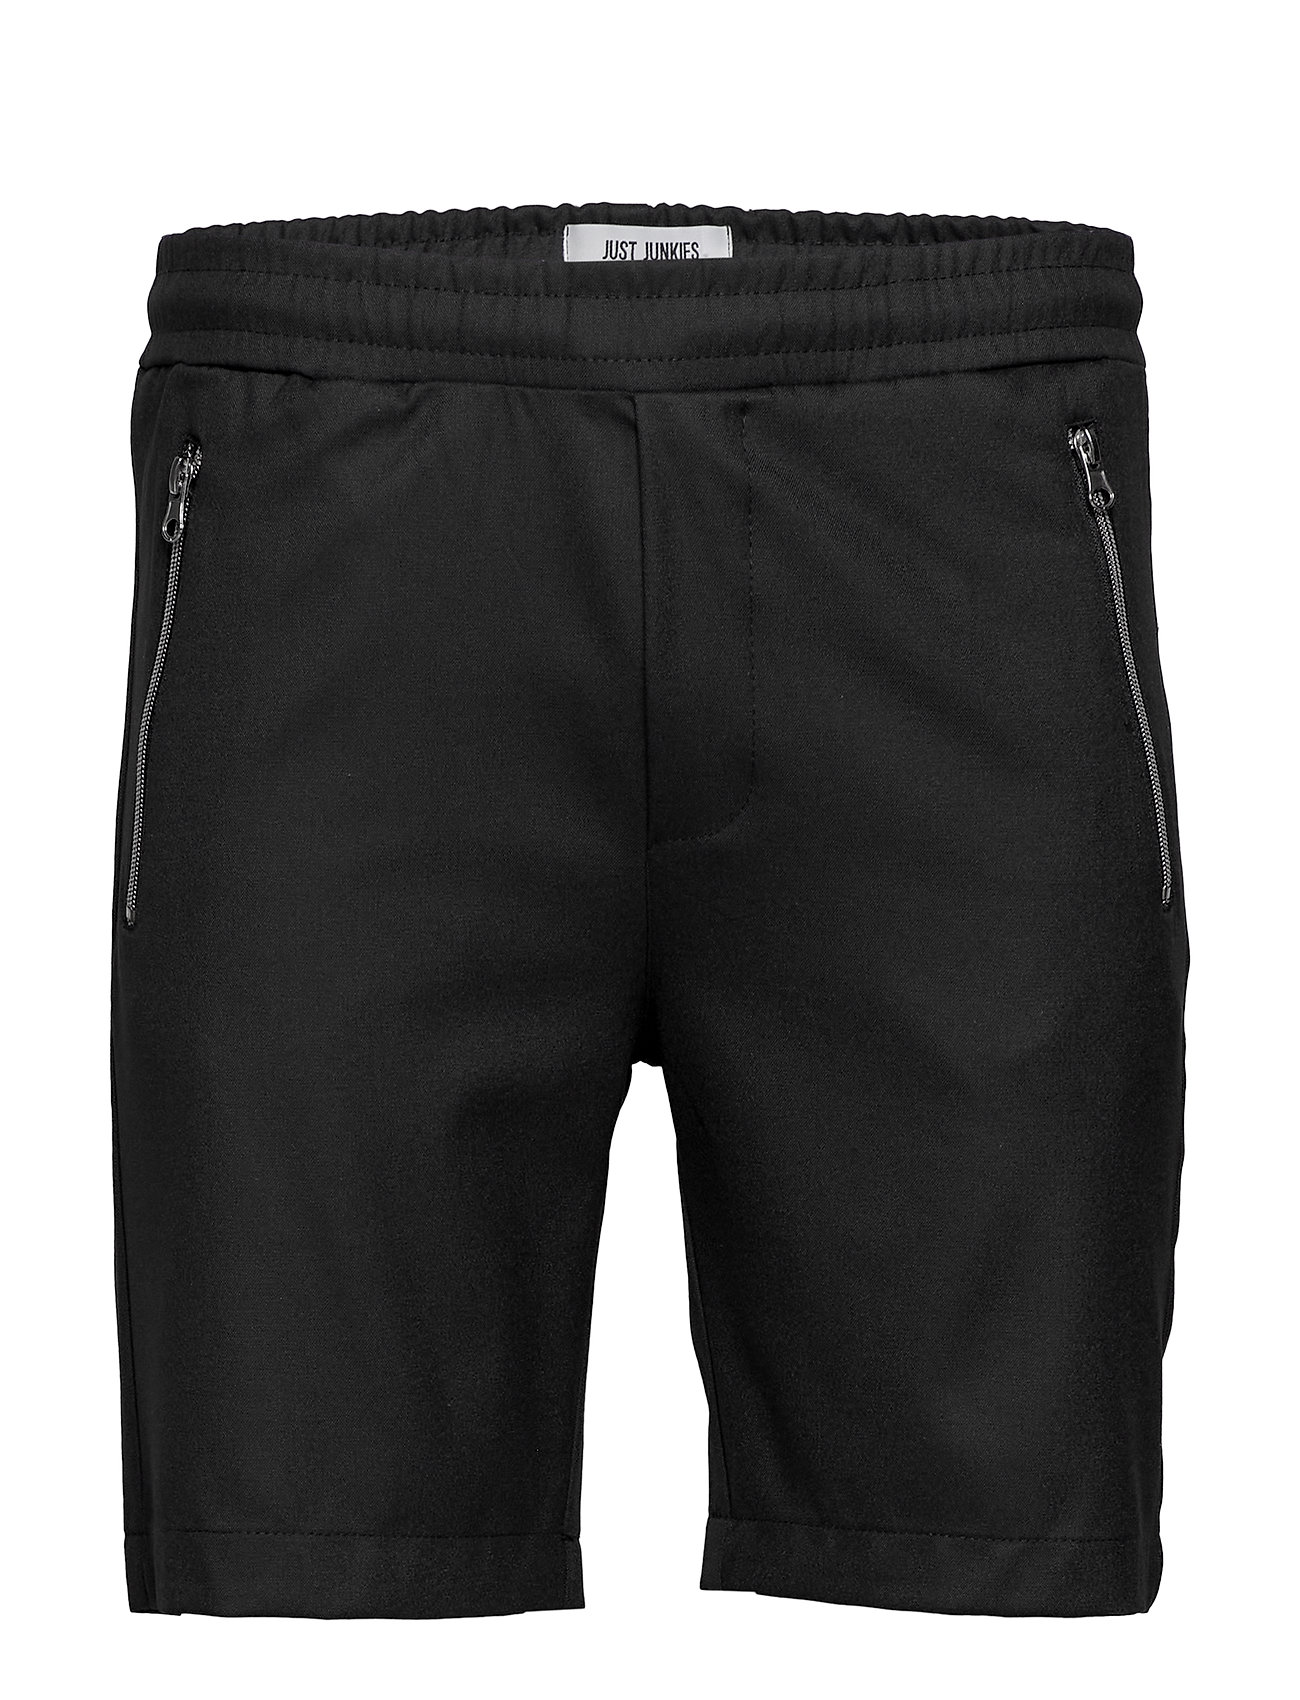 Sort Flex Shorts 2.0 Bis Shorts Casual Sort Just Junkies shorts herre - Pashion.dk